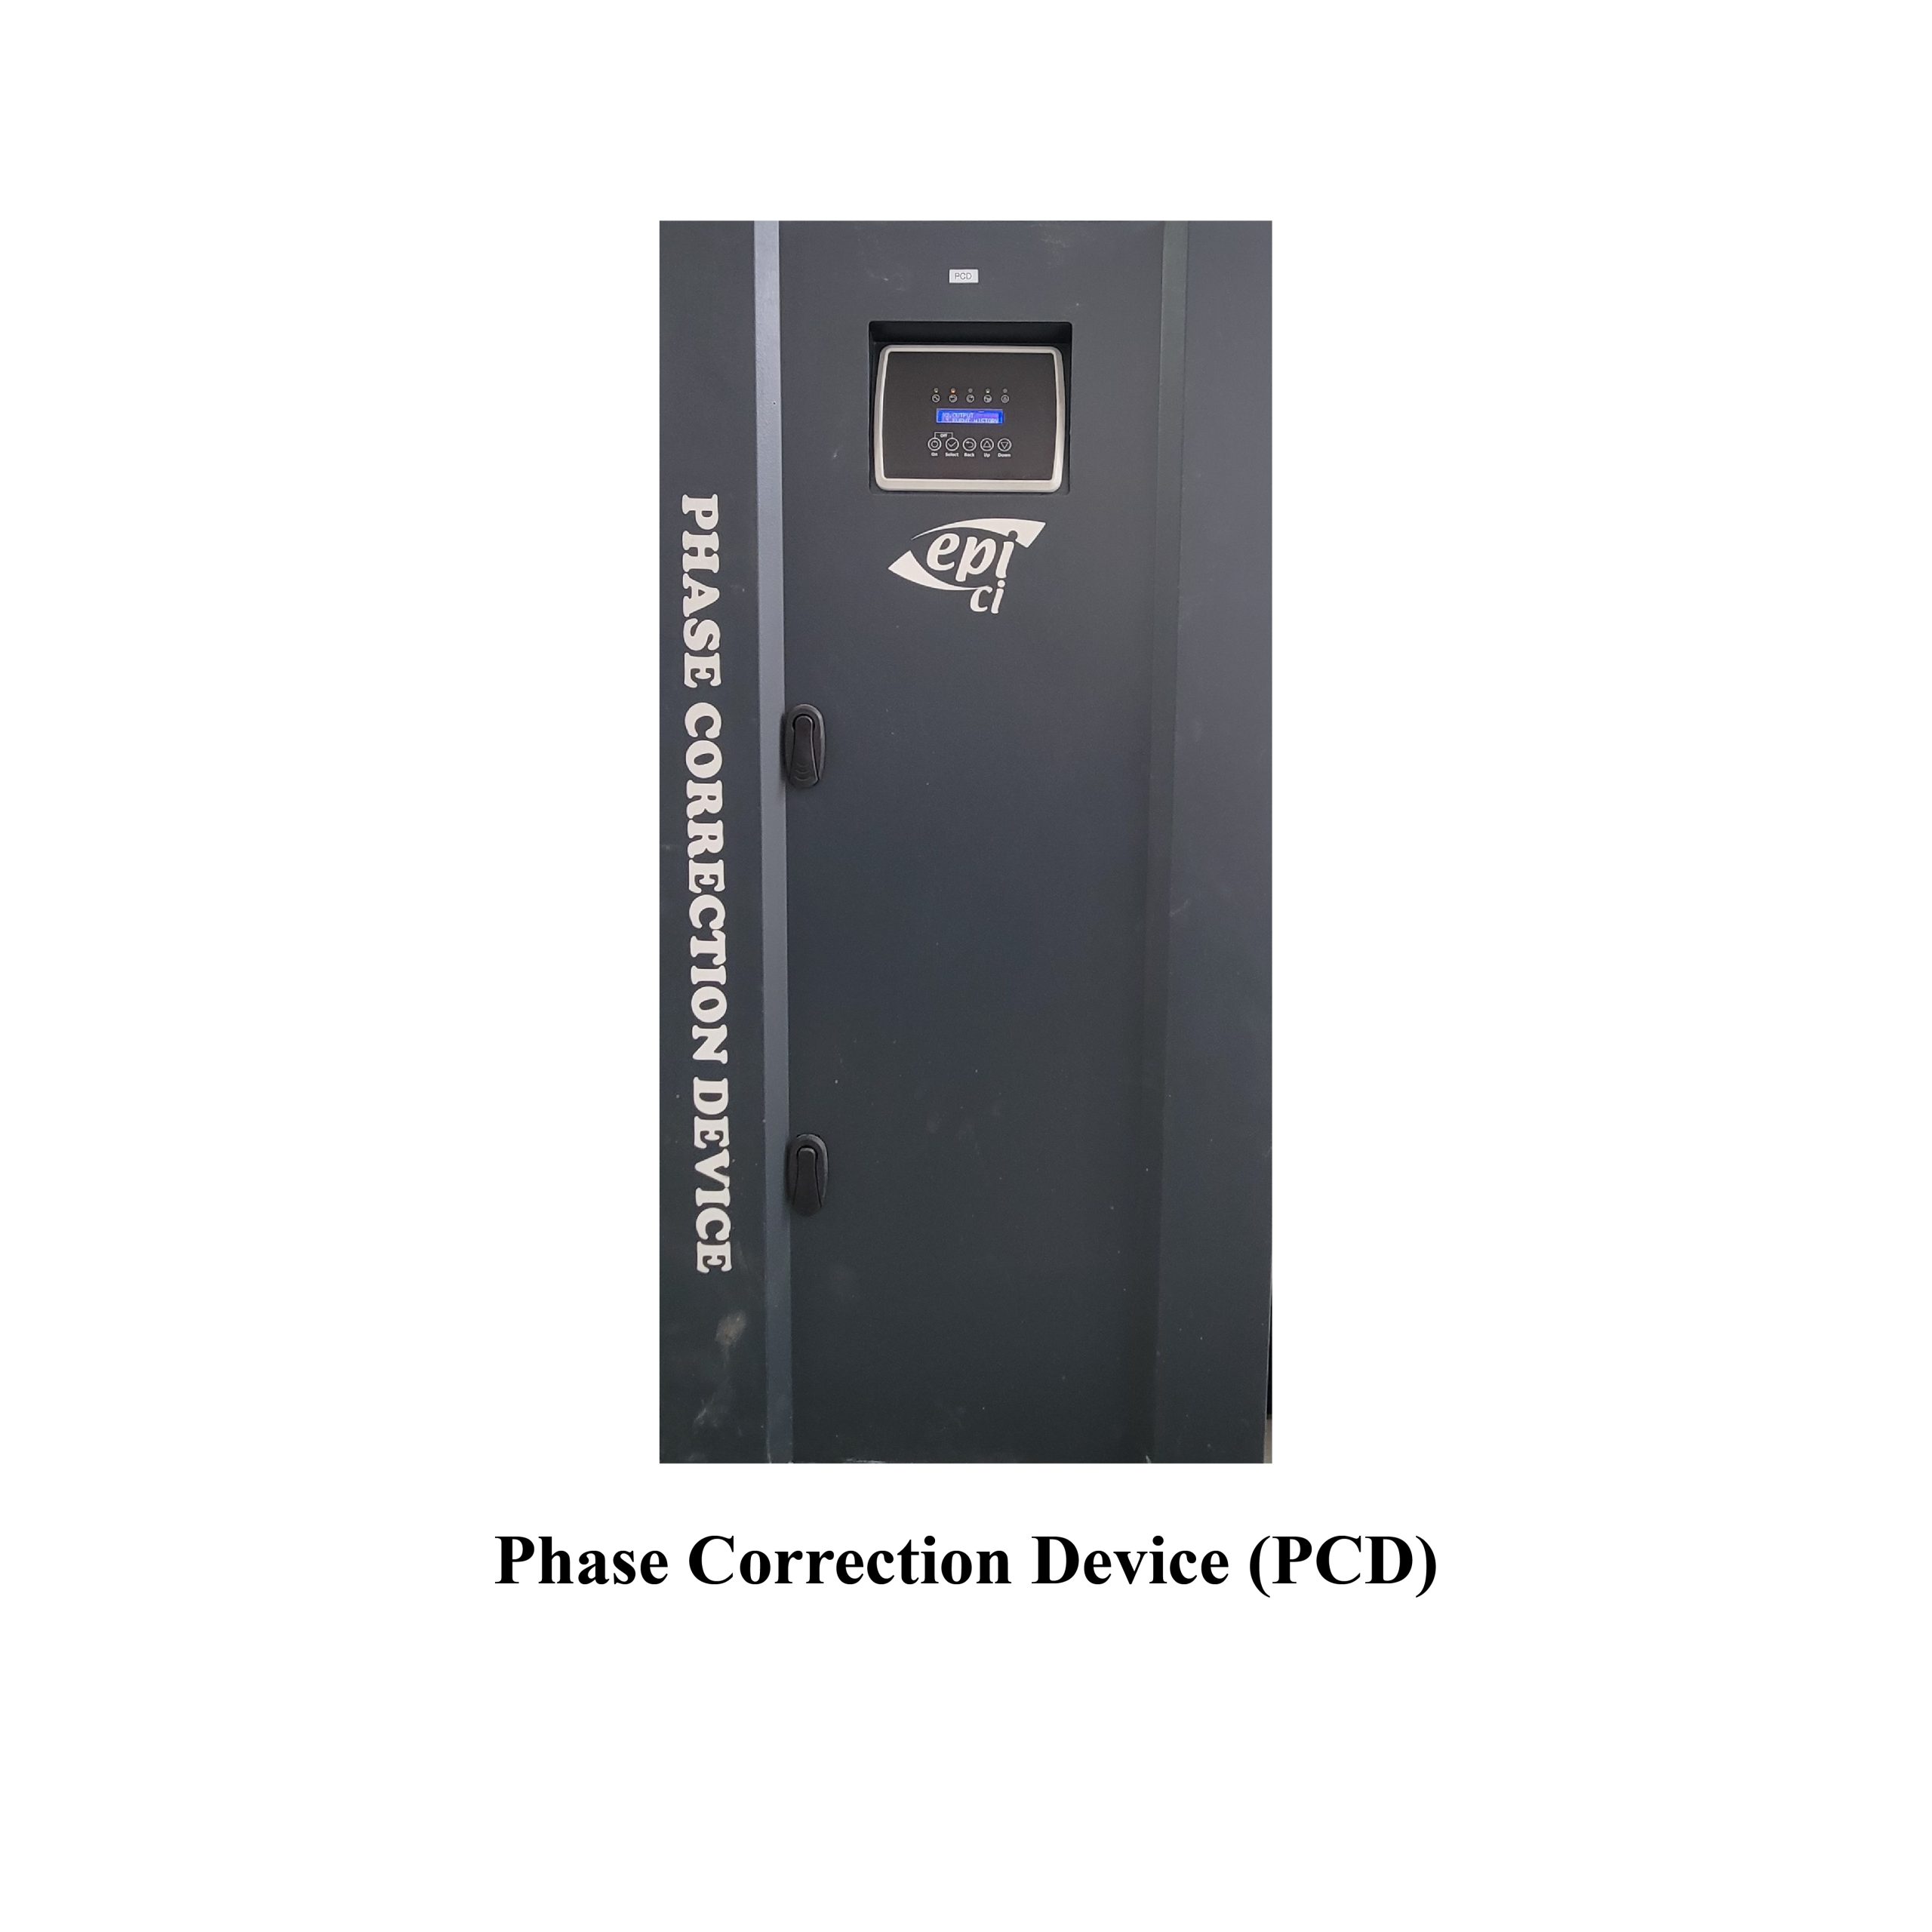 Phase Correction Device (PCD)